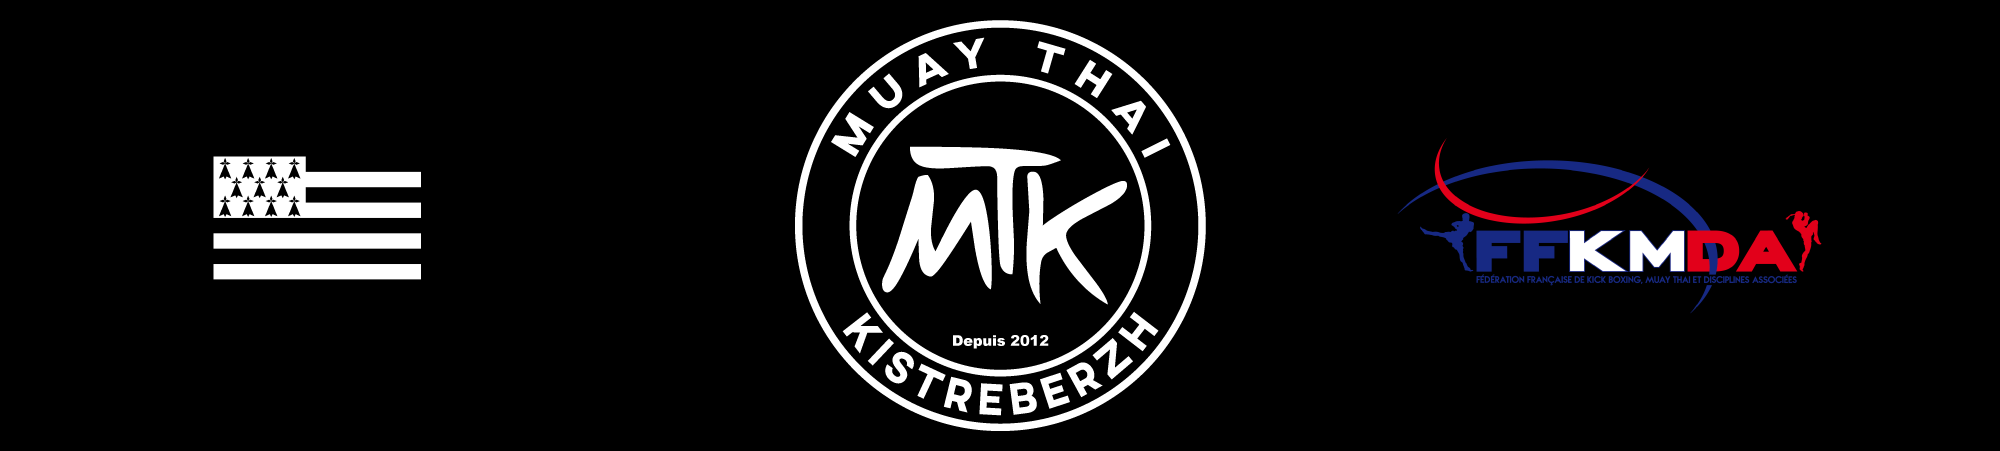 www.muay-thai-kistreberzh.fr